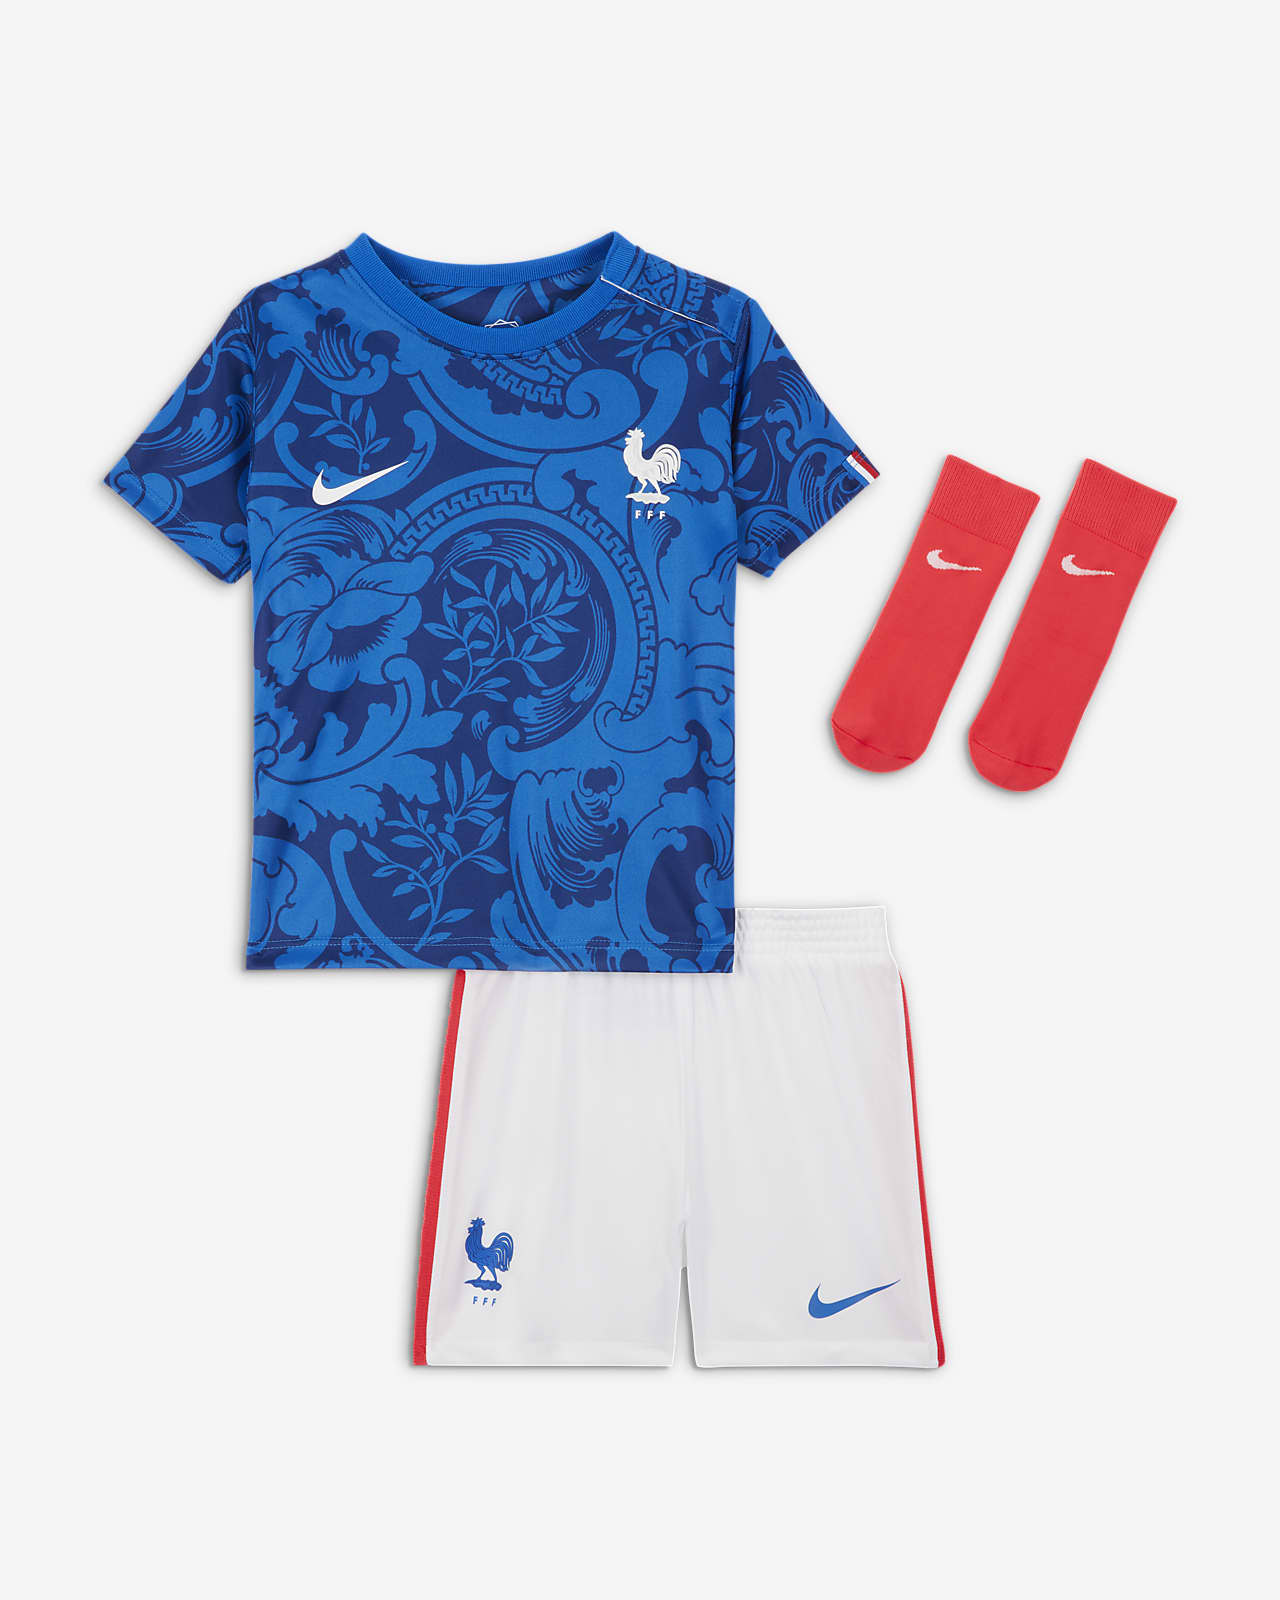 FFF 2022 Home Baby/Toddler Nike Football Kit